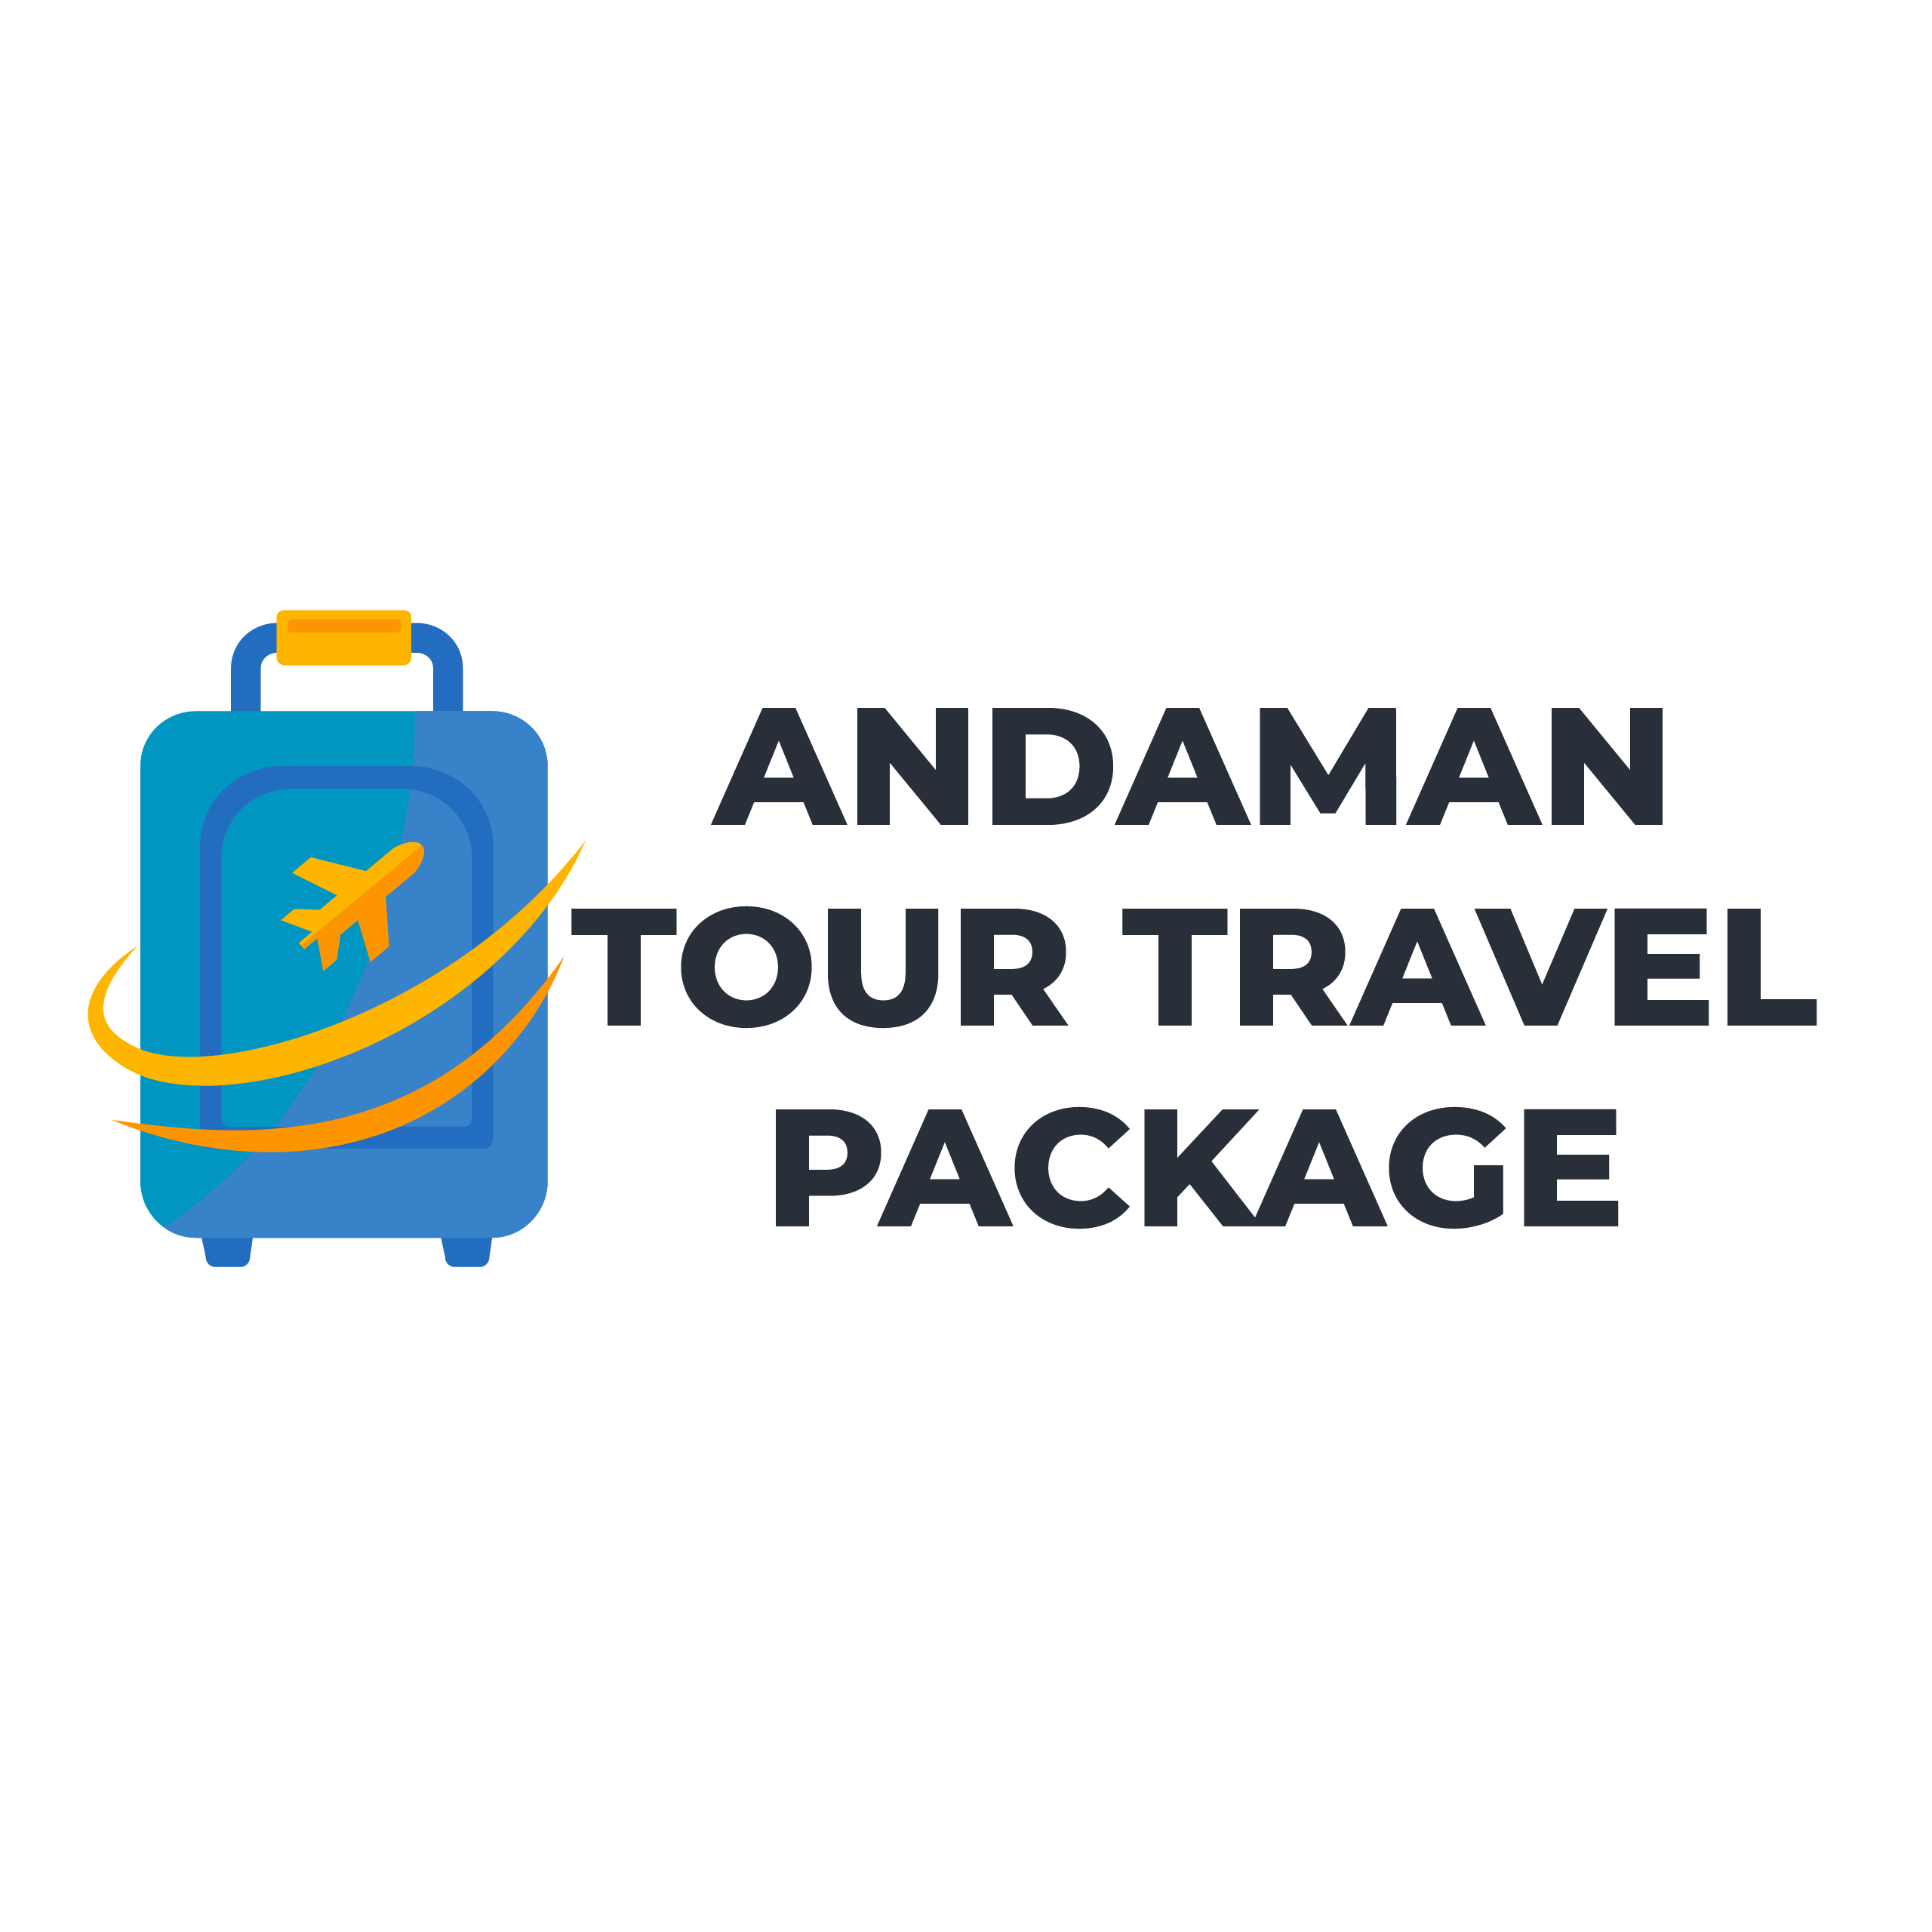 Andamantourtravelpackage